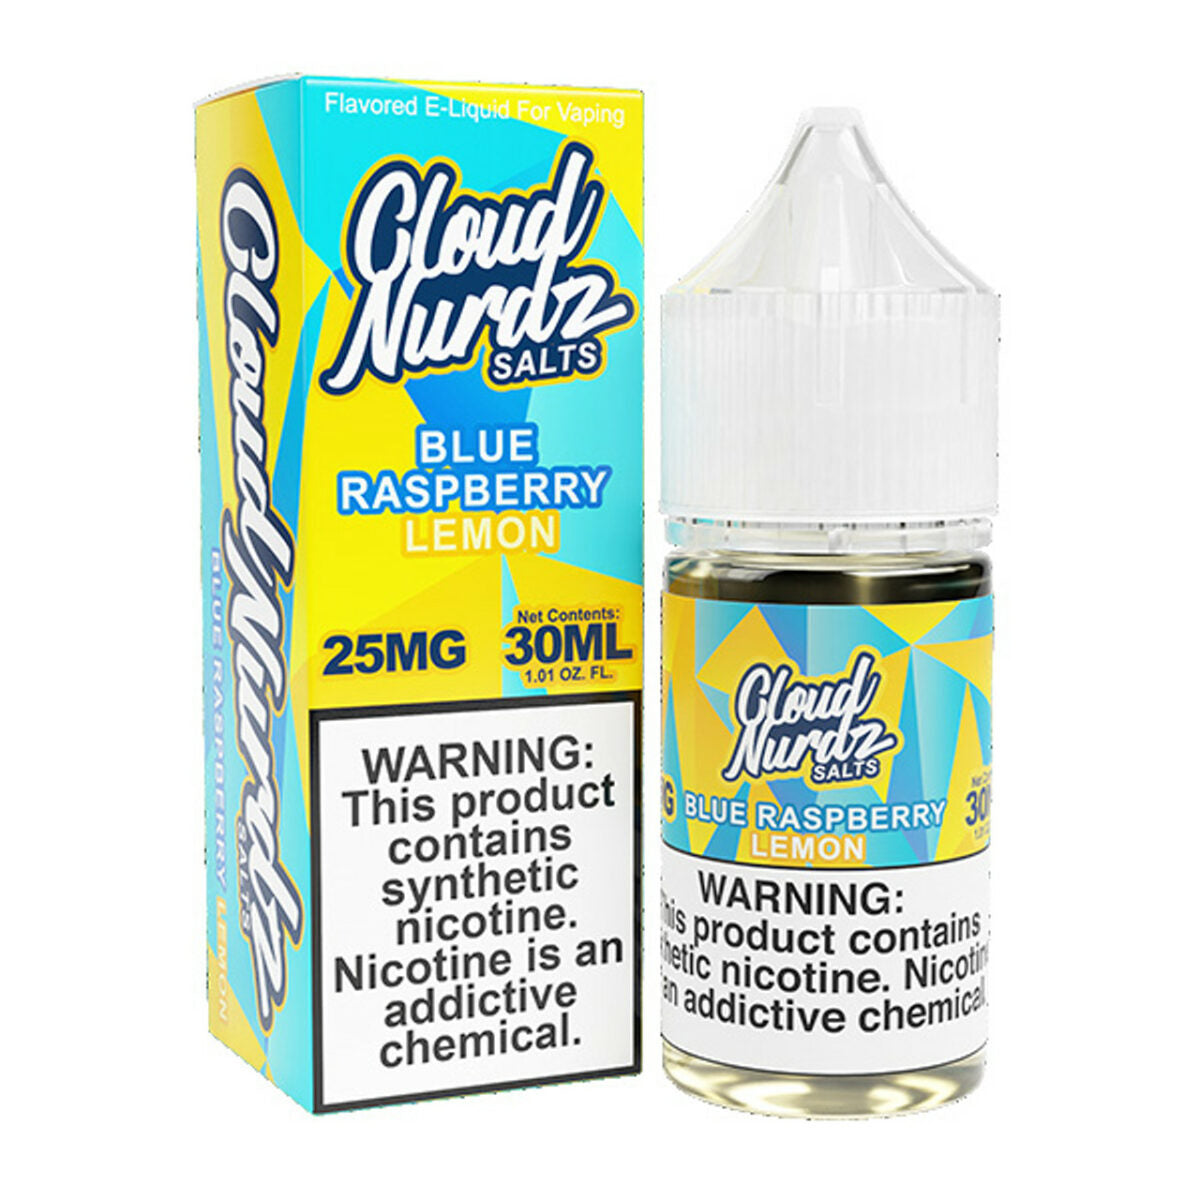 Cloud Nurdz Salt Series E-Liquid 30mL Blue Raspberry Lemon with packaging